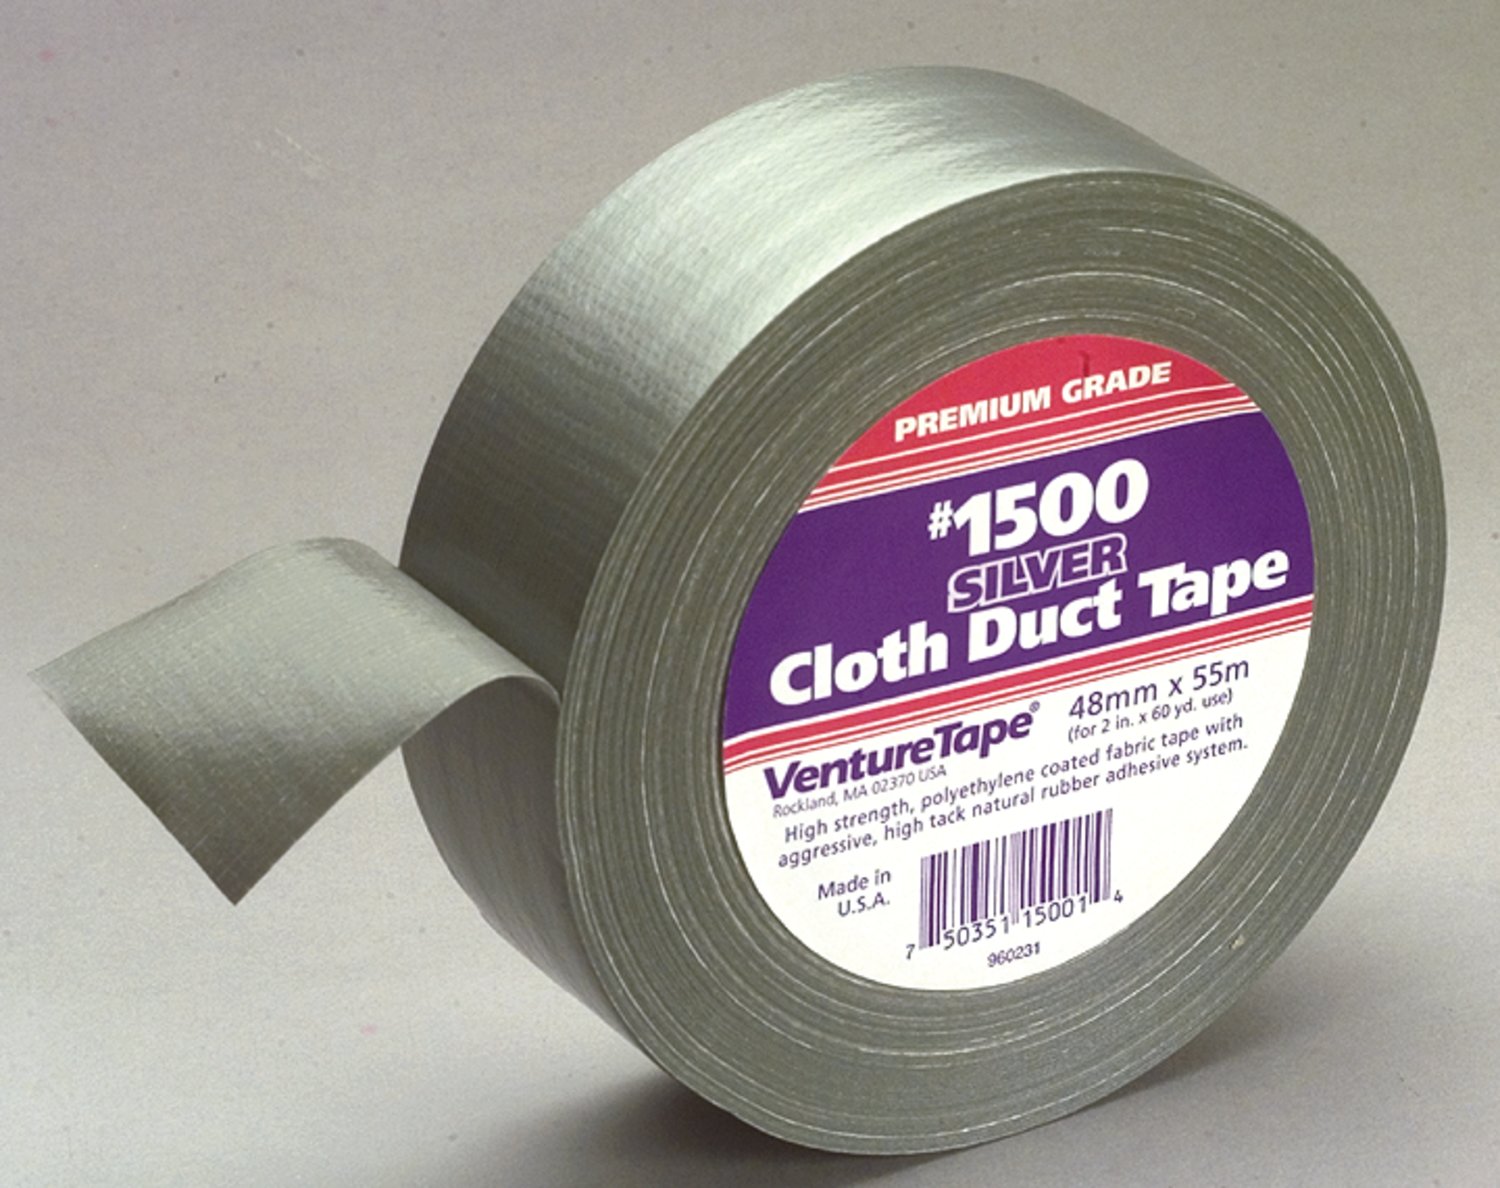 7100043836 - 3M Venture Tape Cloth Duct Tape 1500, Silver, 48 mm x 55 m (1.88 in x
60.1 yd), 24/Case